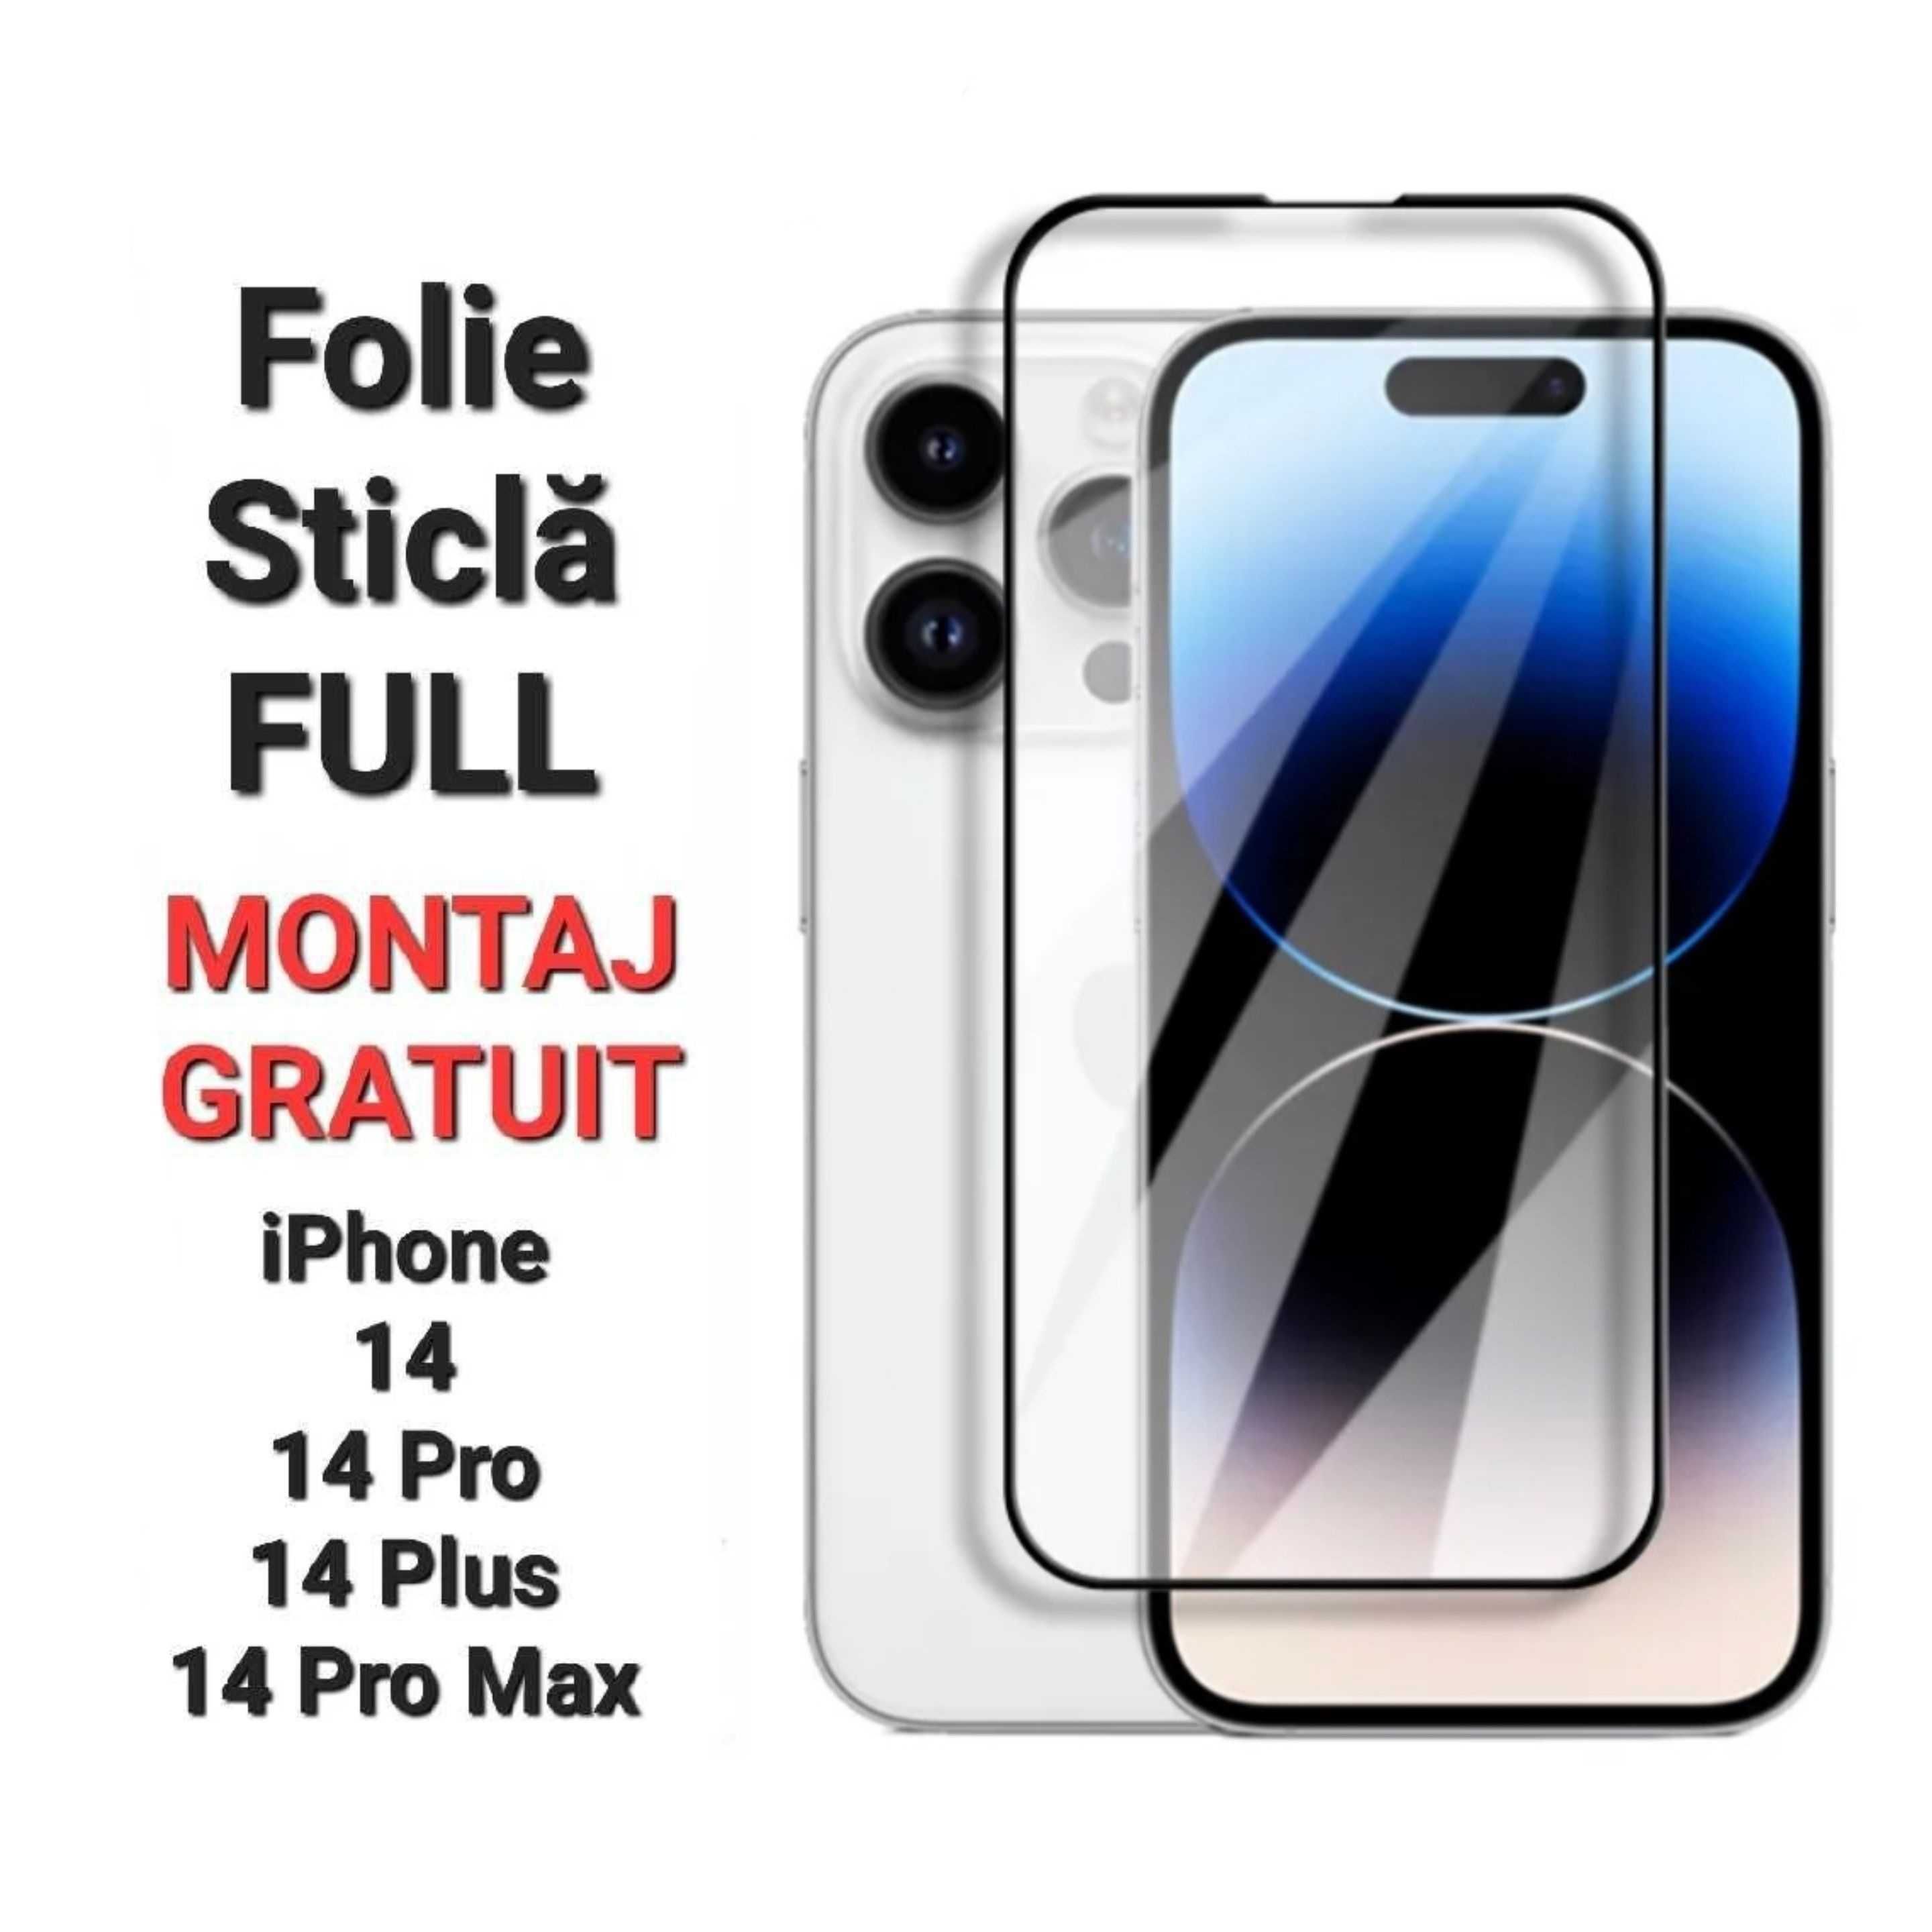 Set Folie Sticla Full + Husa Slim Transparenta - iPhone 14 Pro Max